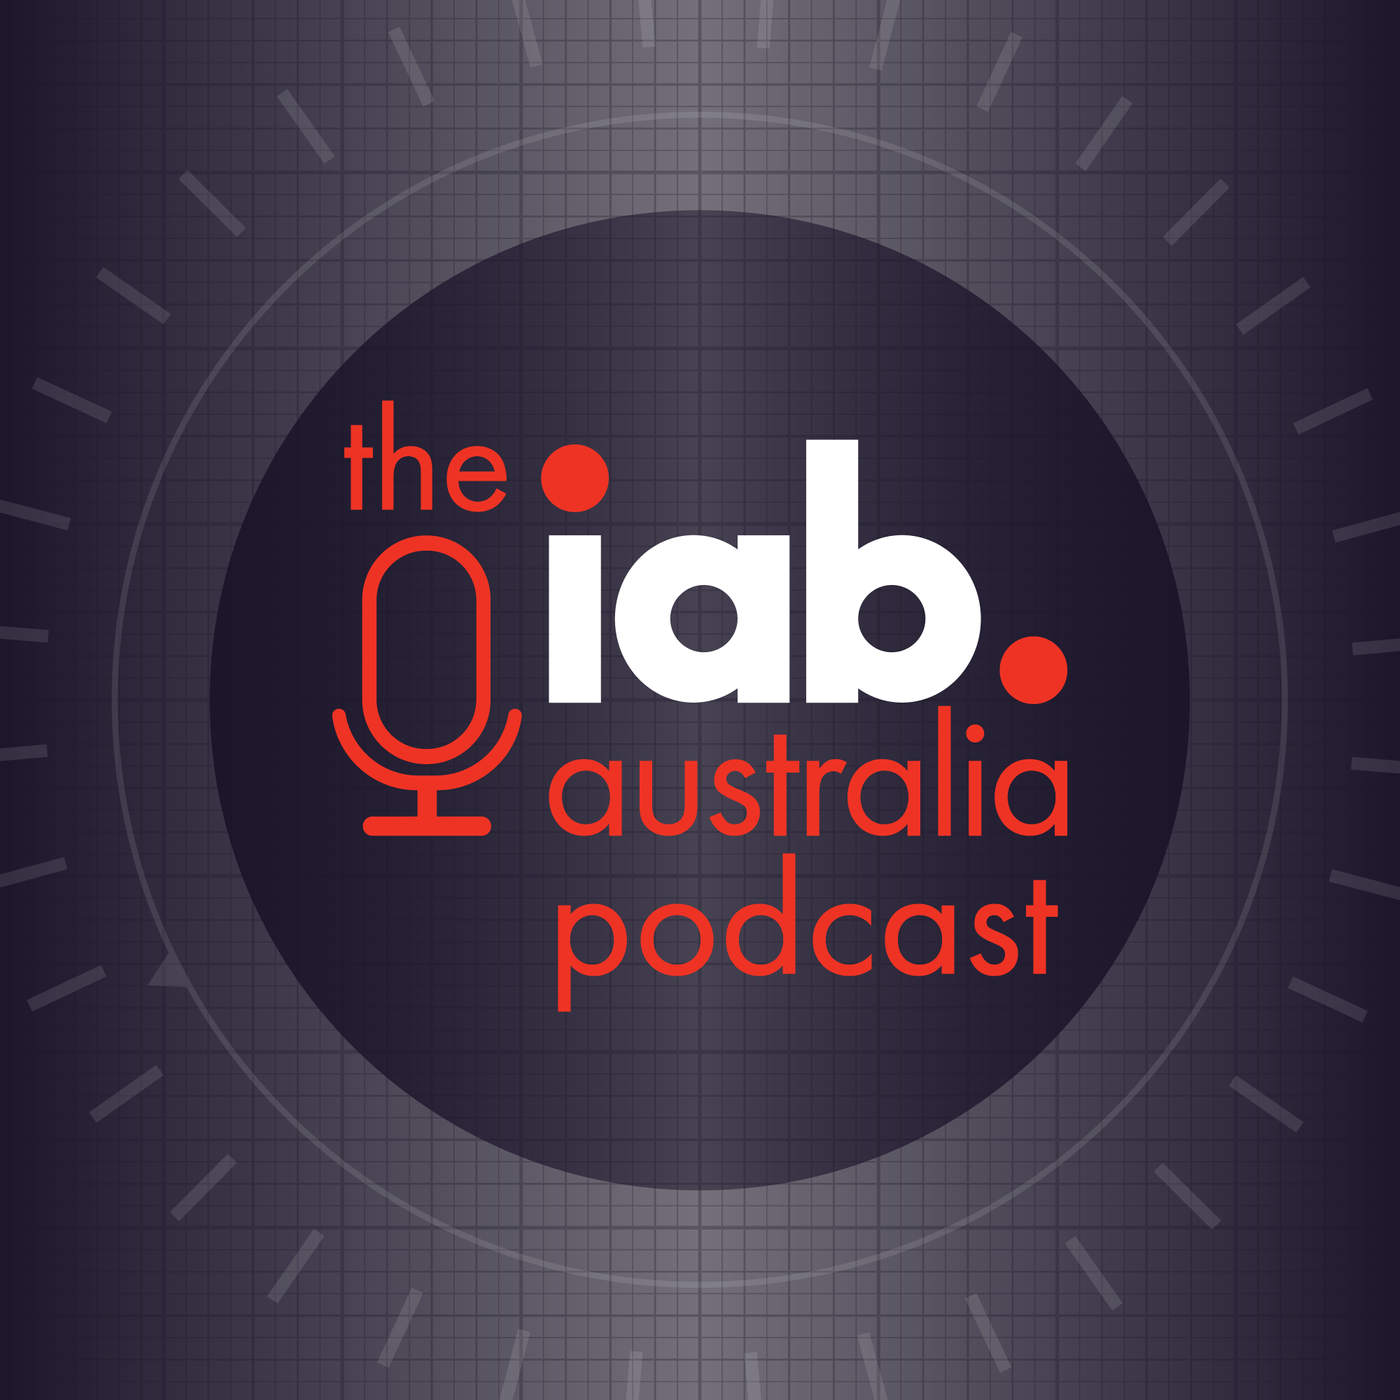 IAB Australia Audio Summit Podcast: The Art of Influence - Connecting with Gen Z Thru Audio